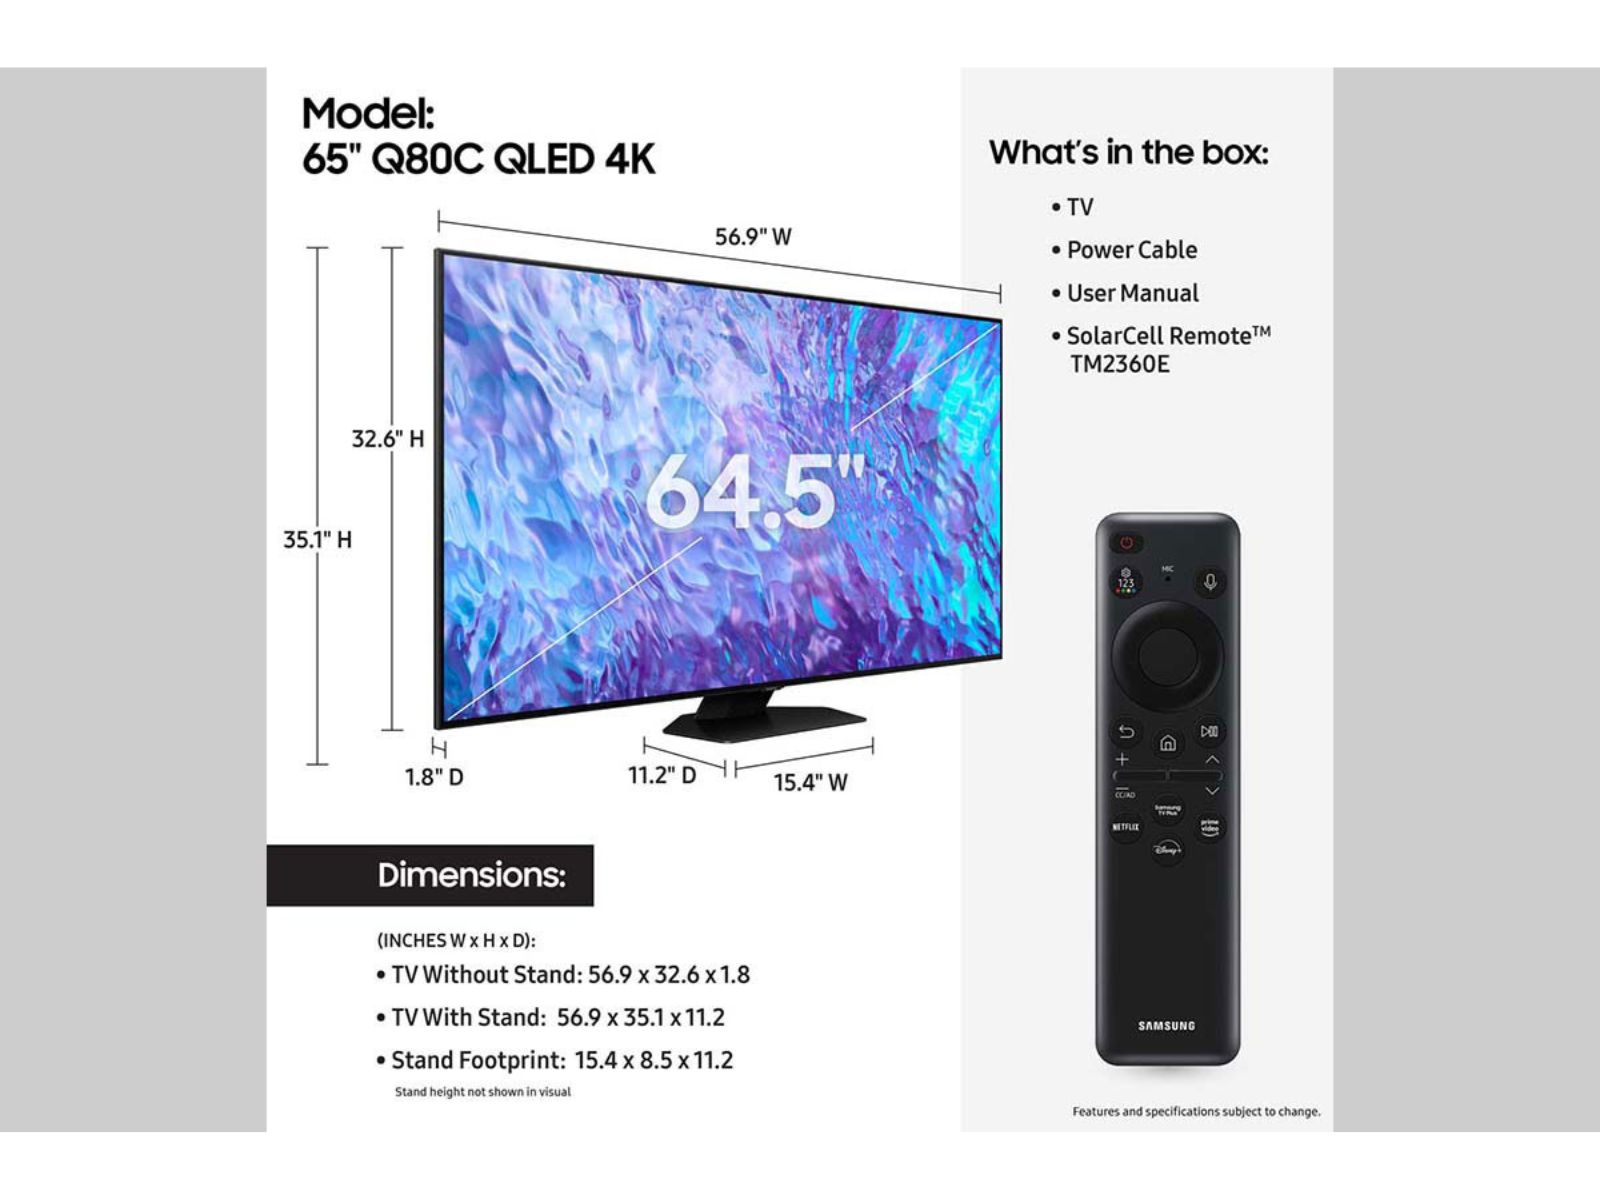 TV SAMSUNG QE65Q75BATXXC (QLED - 65'' - 165 cm - 4K Ultra HD - Smart TV) 